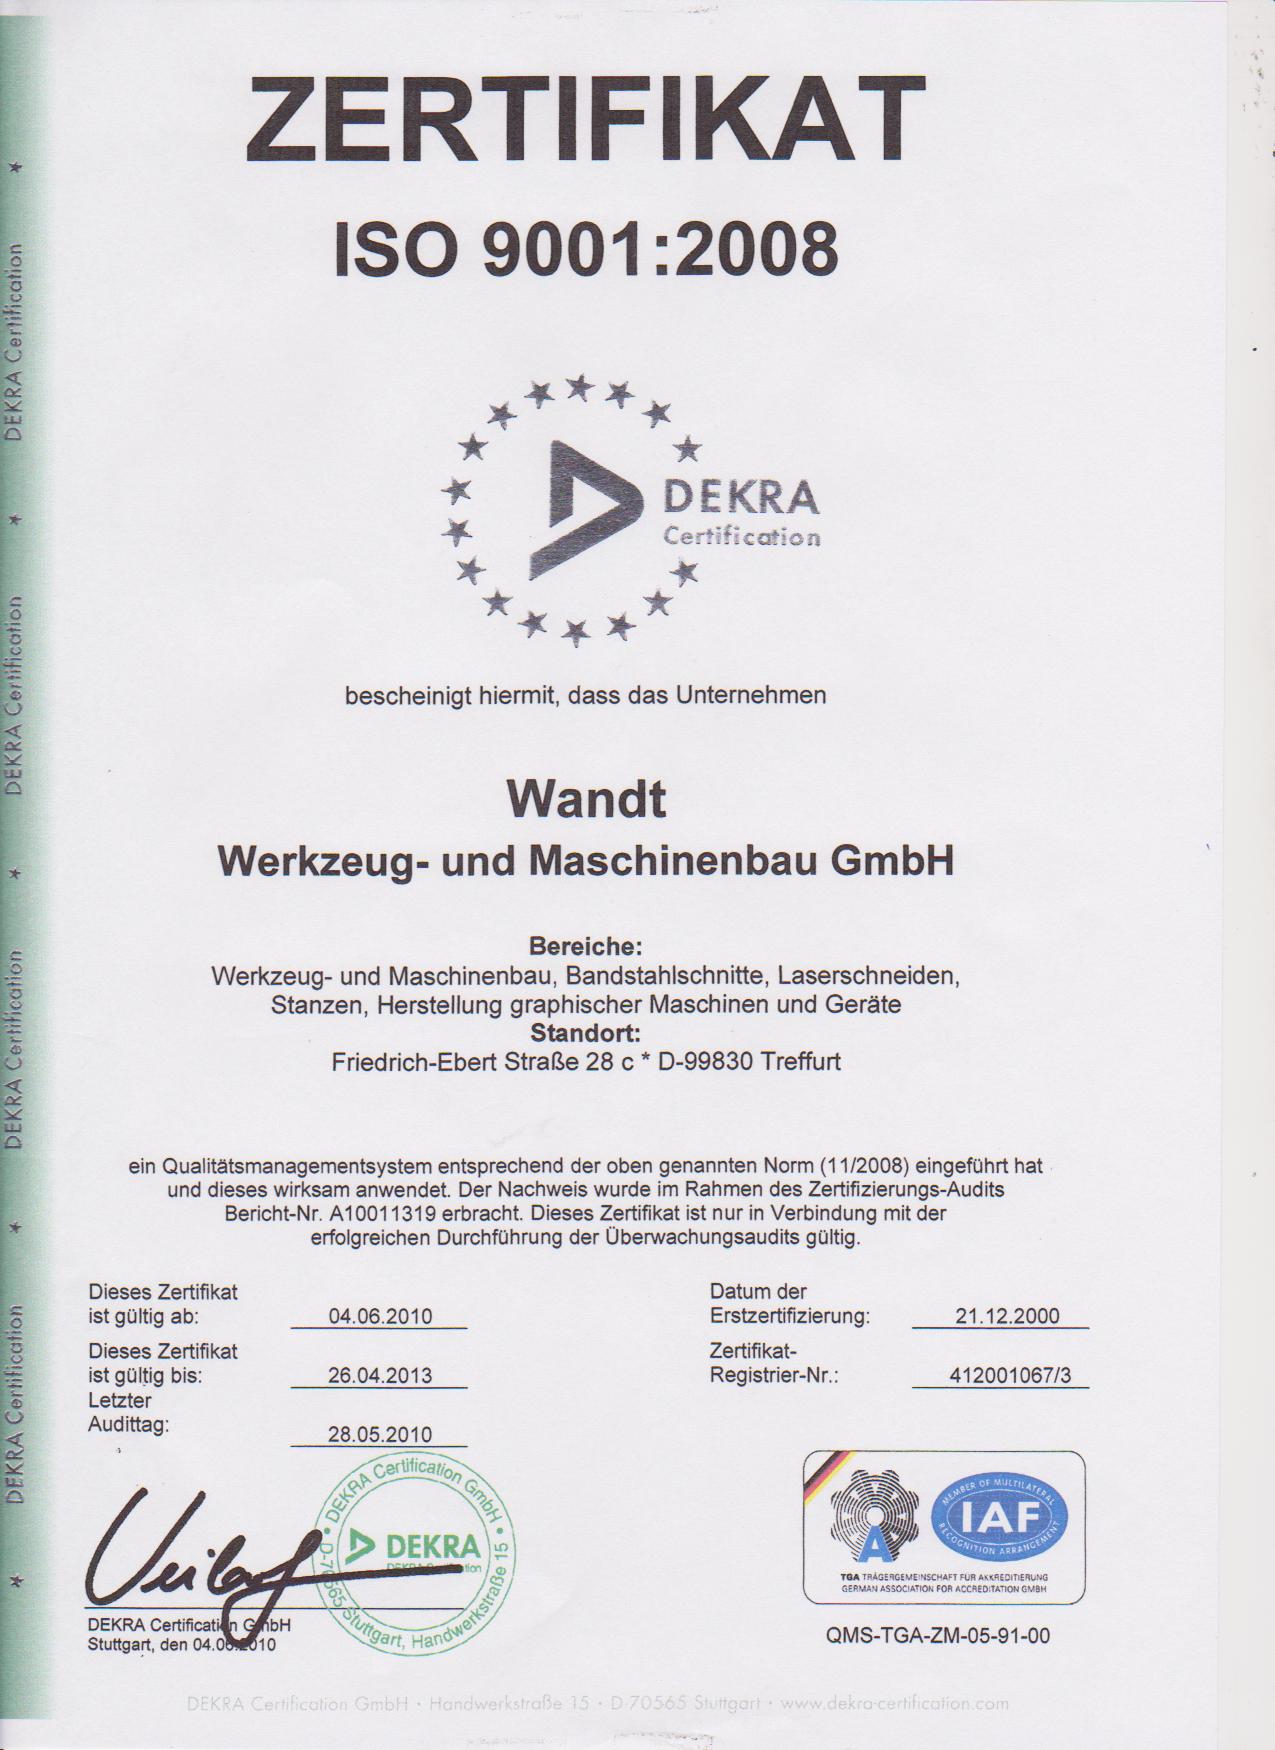 DIN EN ISO 9001:2008::Dieses Zertifikat gültig vom 04.06.2010 bis 26.04.2013